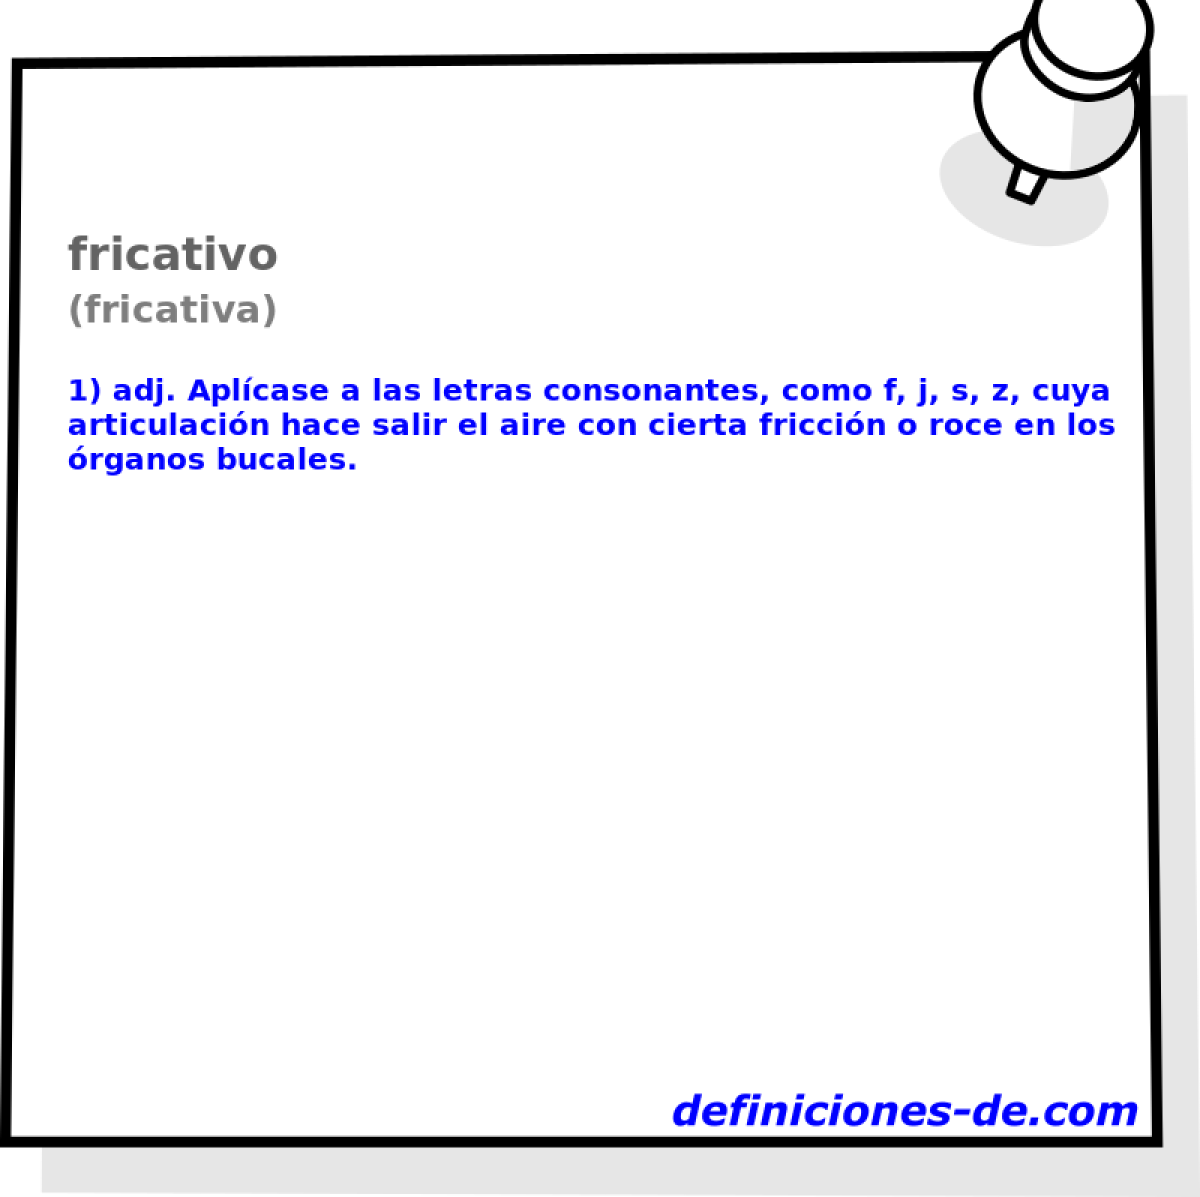 fricativo (fricativa)